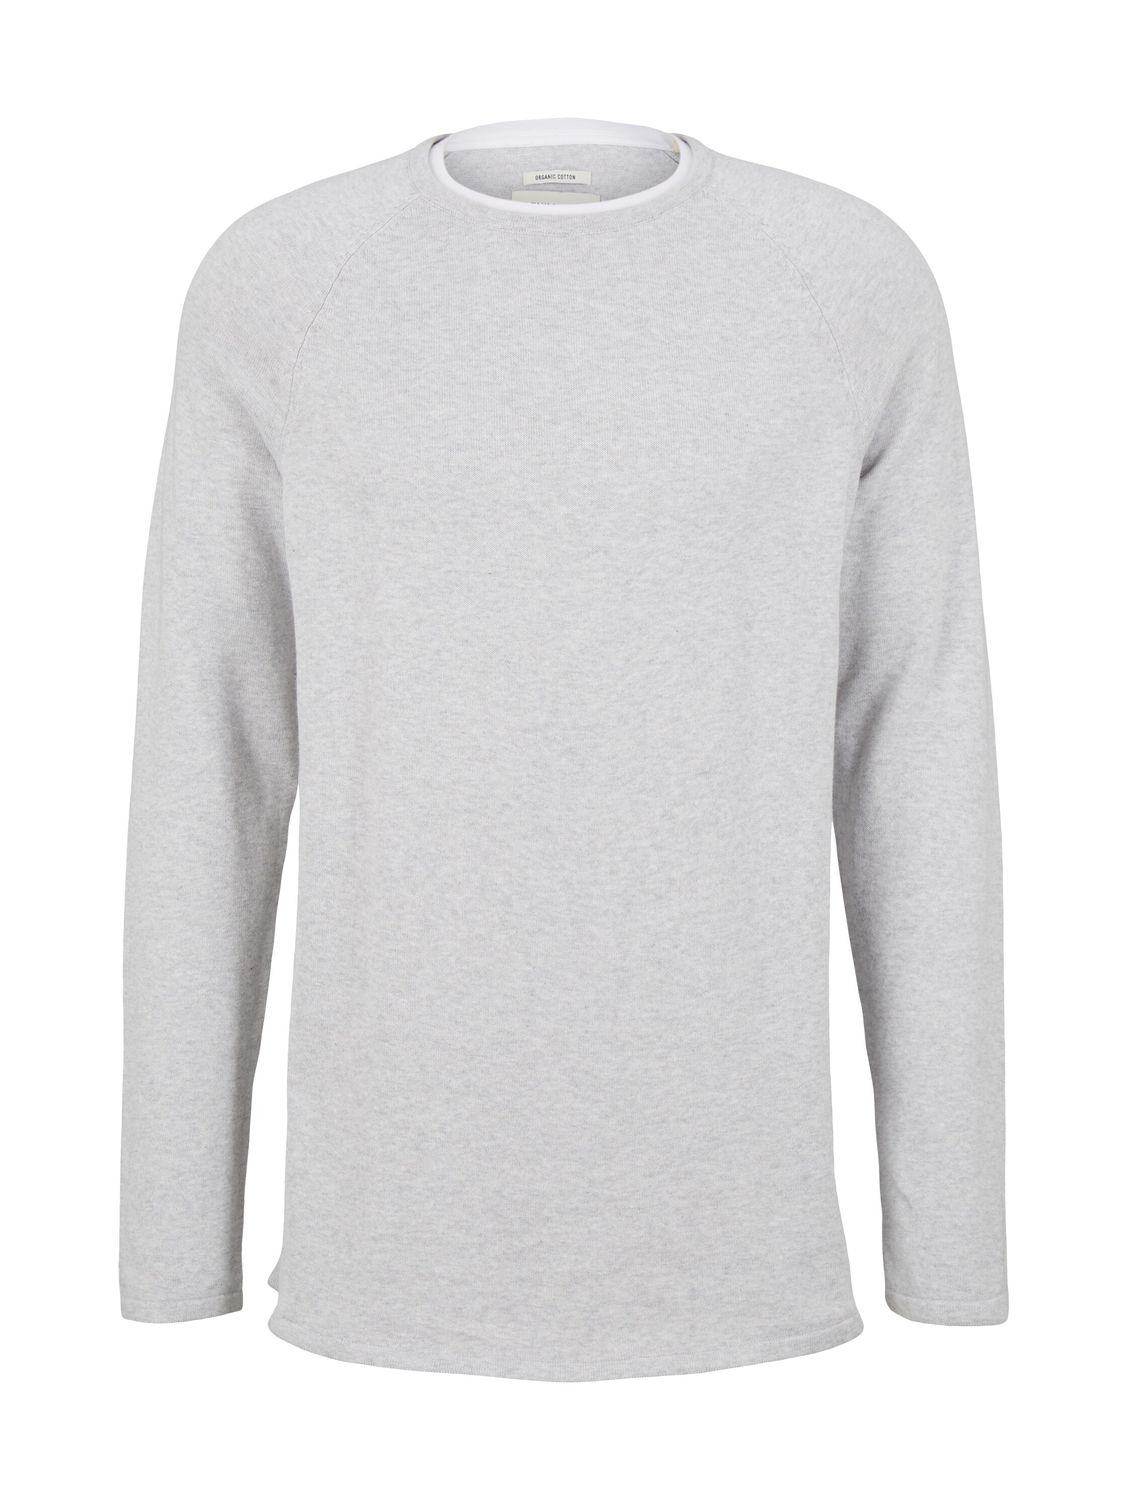 Пуловер TOM TAILOR Denim BASIC, серый пуловер tom tailor серый